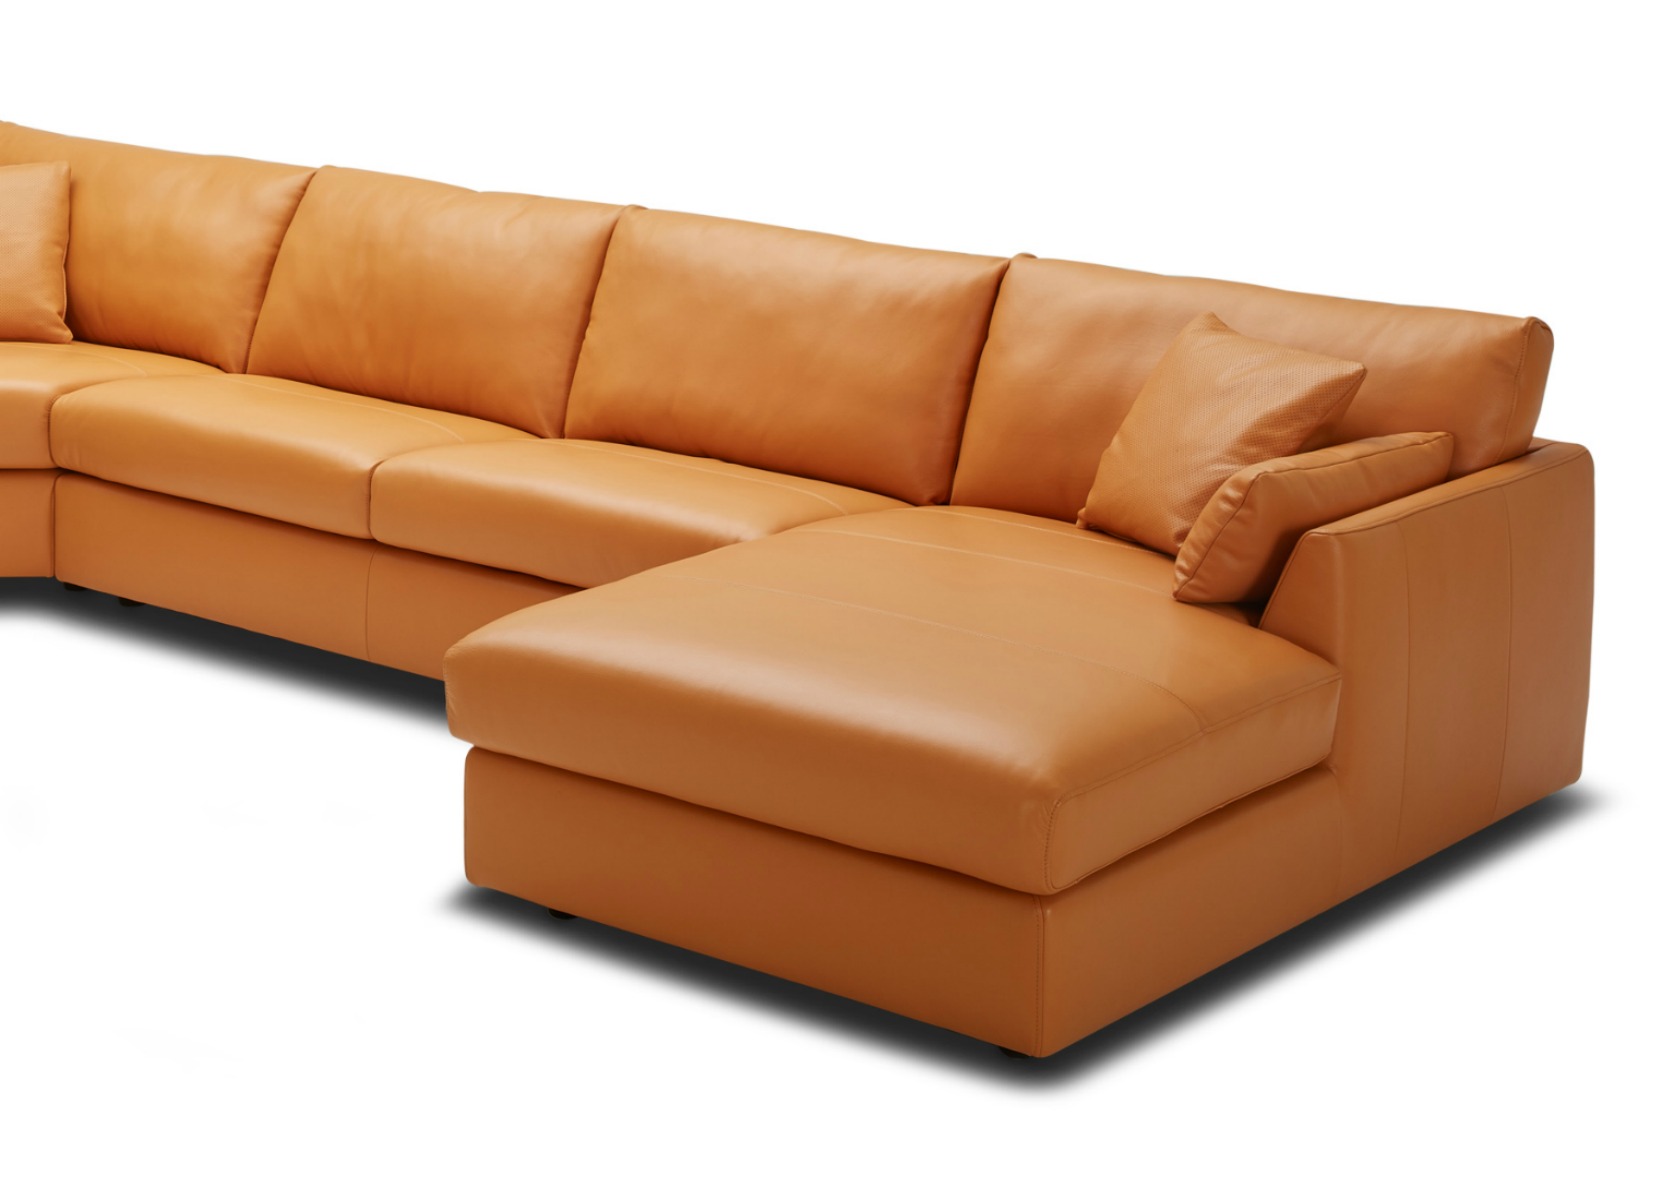 tan leather sofa images